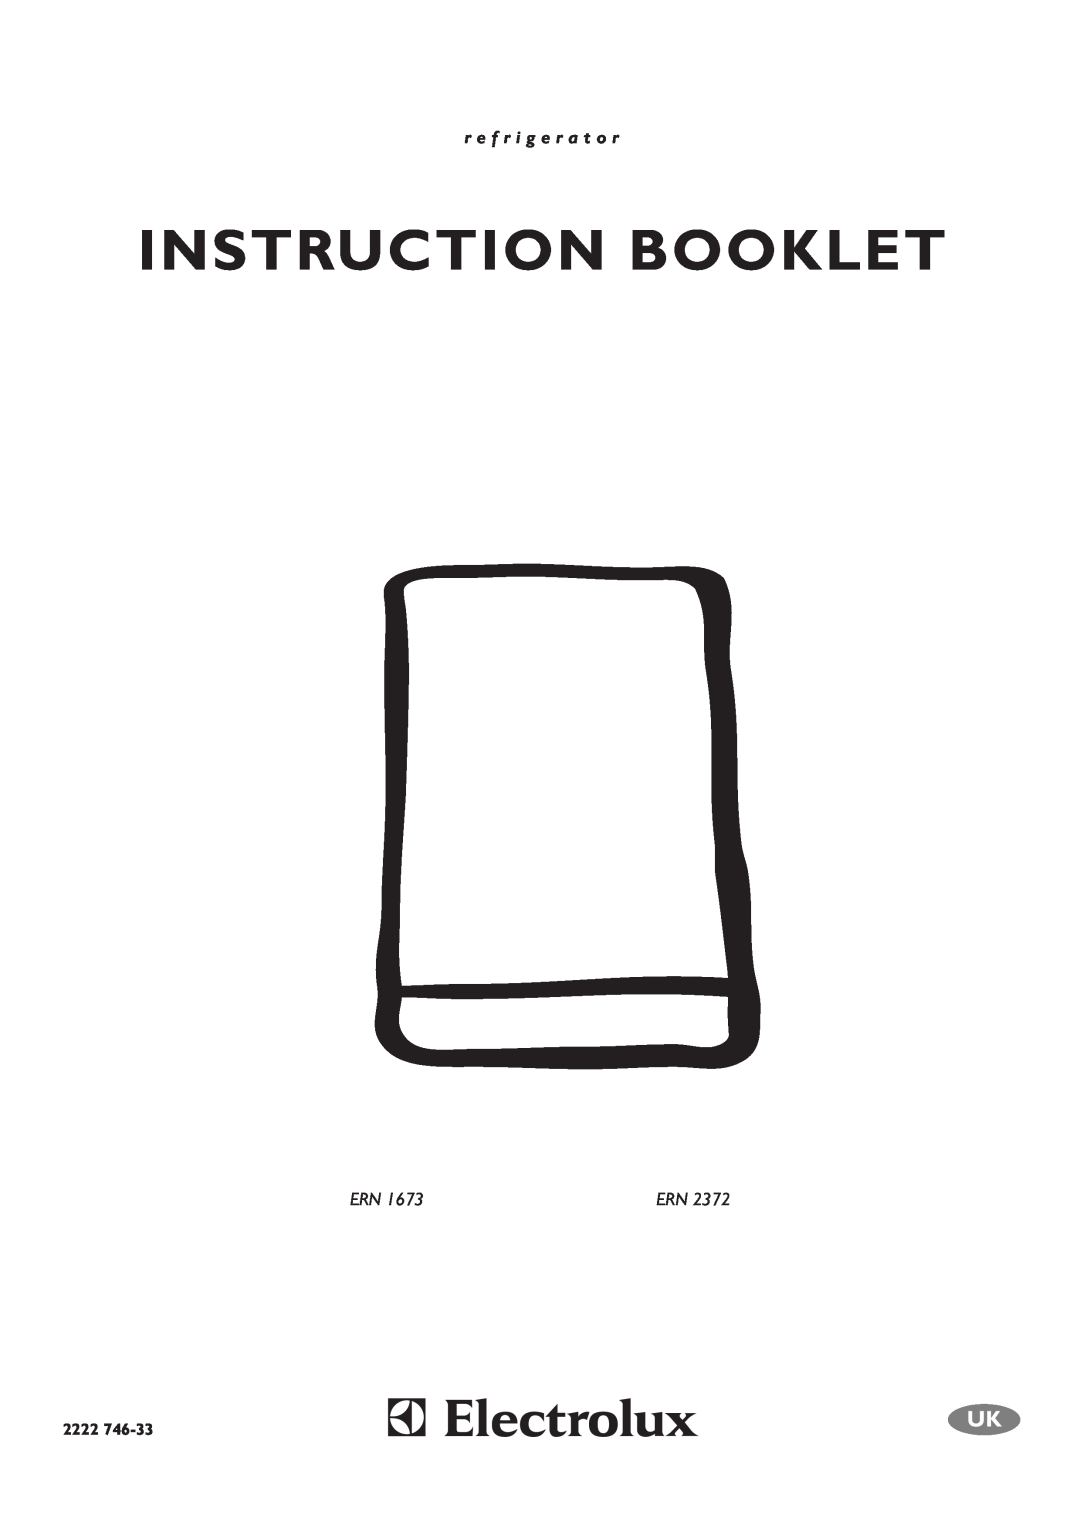 Electrolux ERN 1673 manual Instruction Booklet, r e f r i g e r a t o r, 2222 